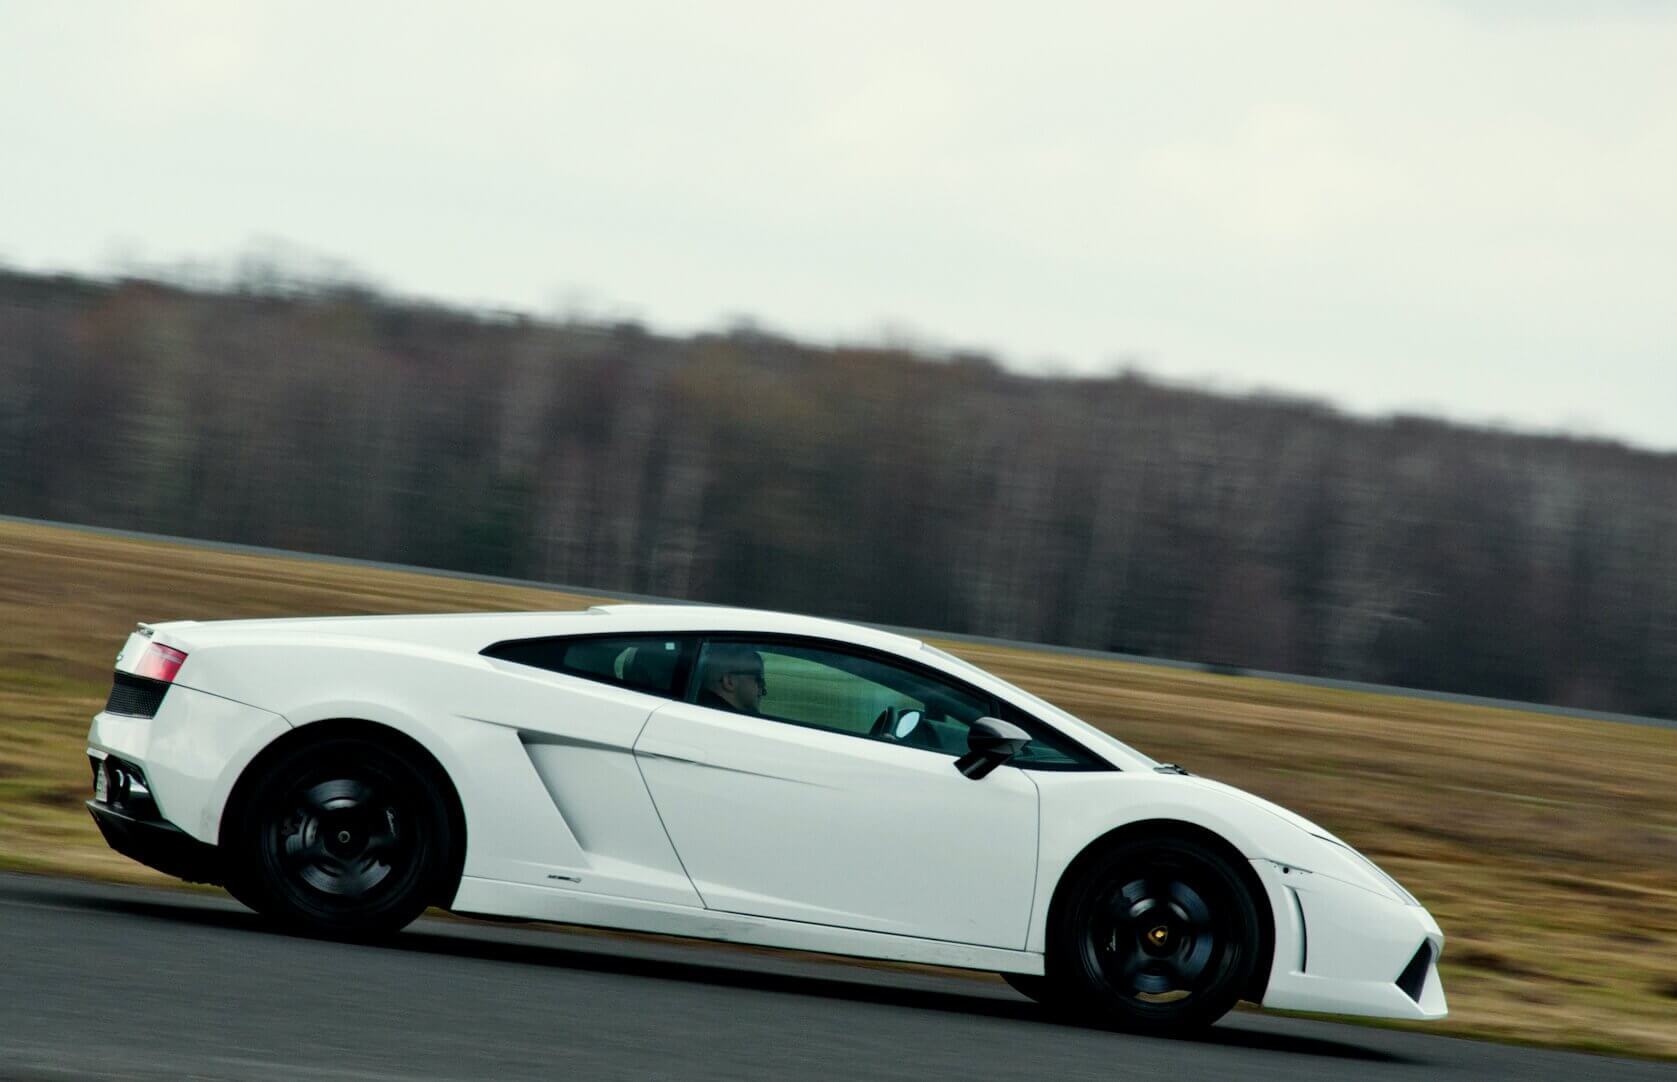 Lamborghini - ekstremalne emocje na torze